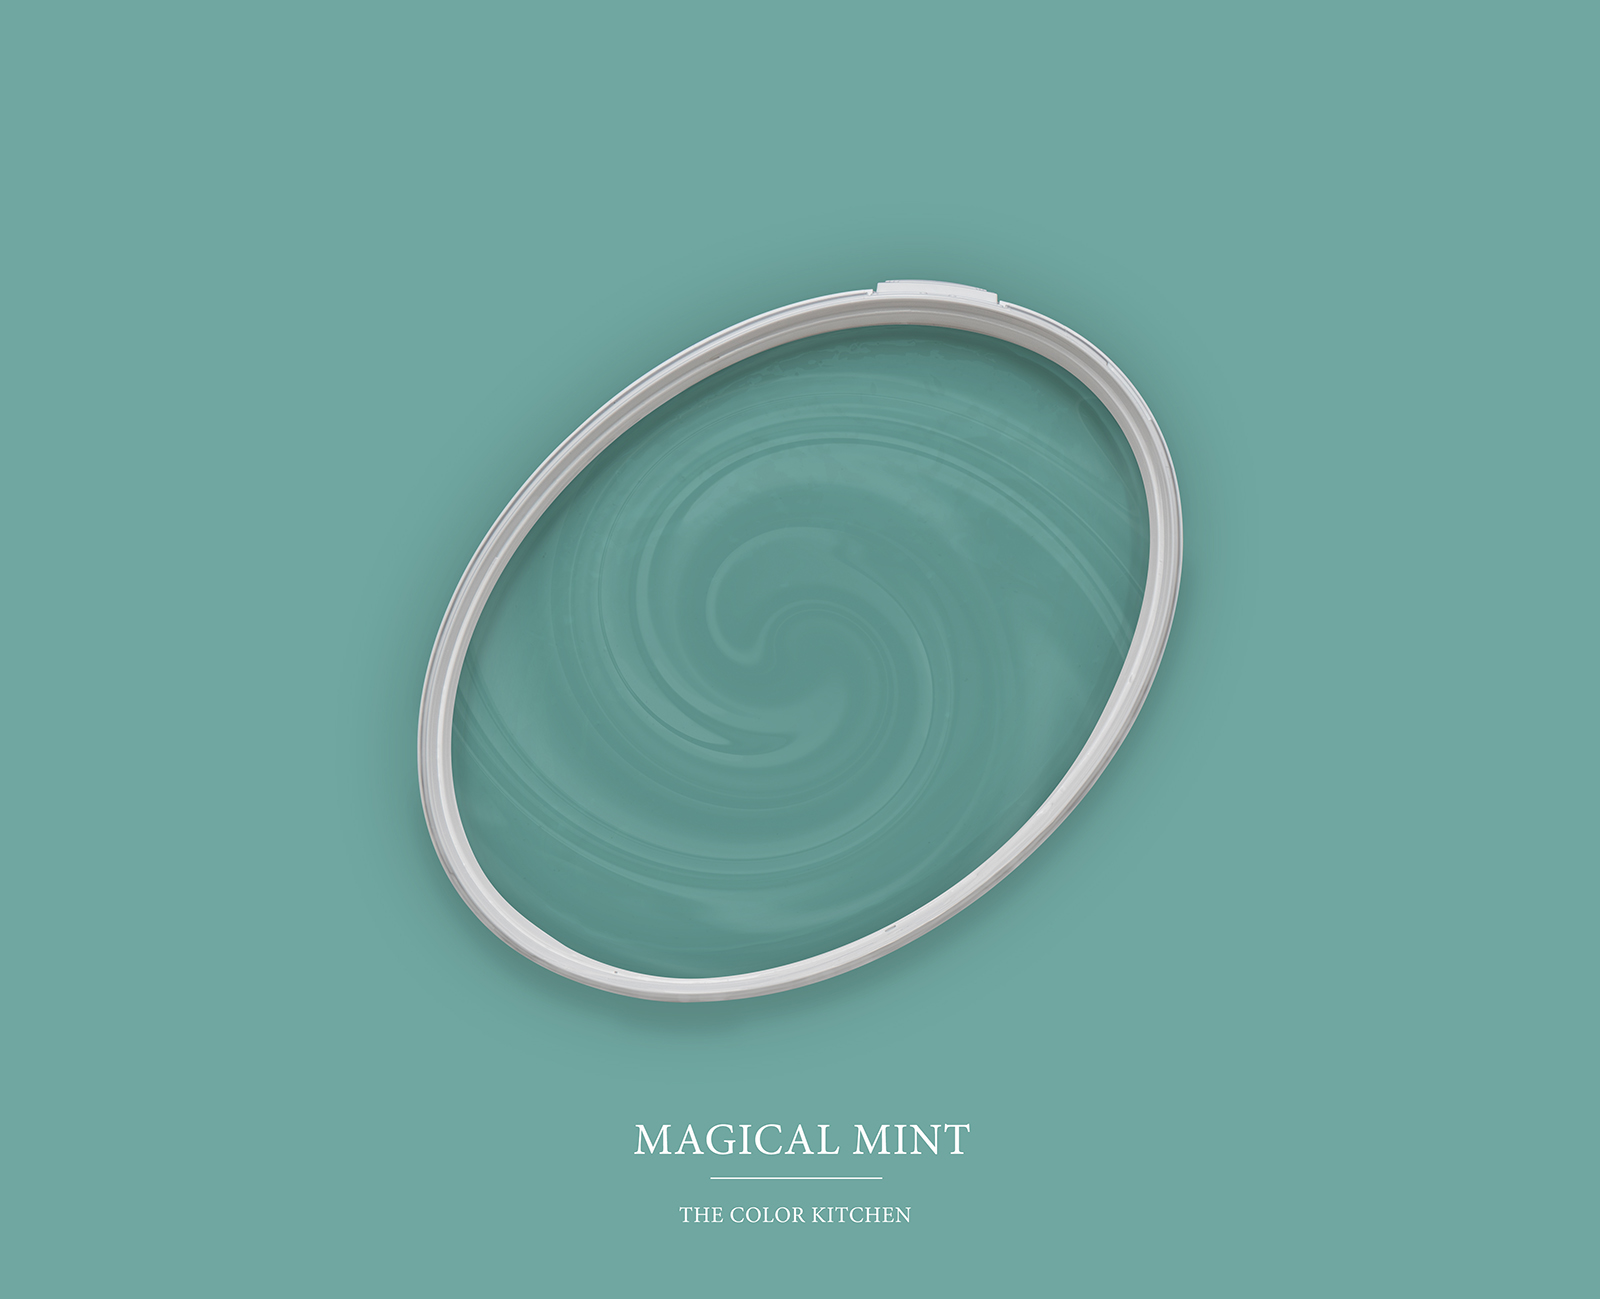         Wandfarbe in hellem Petrol »Magical Mint« TCK3008 – 2,5 Liter
    